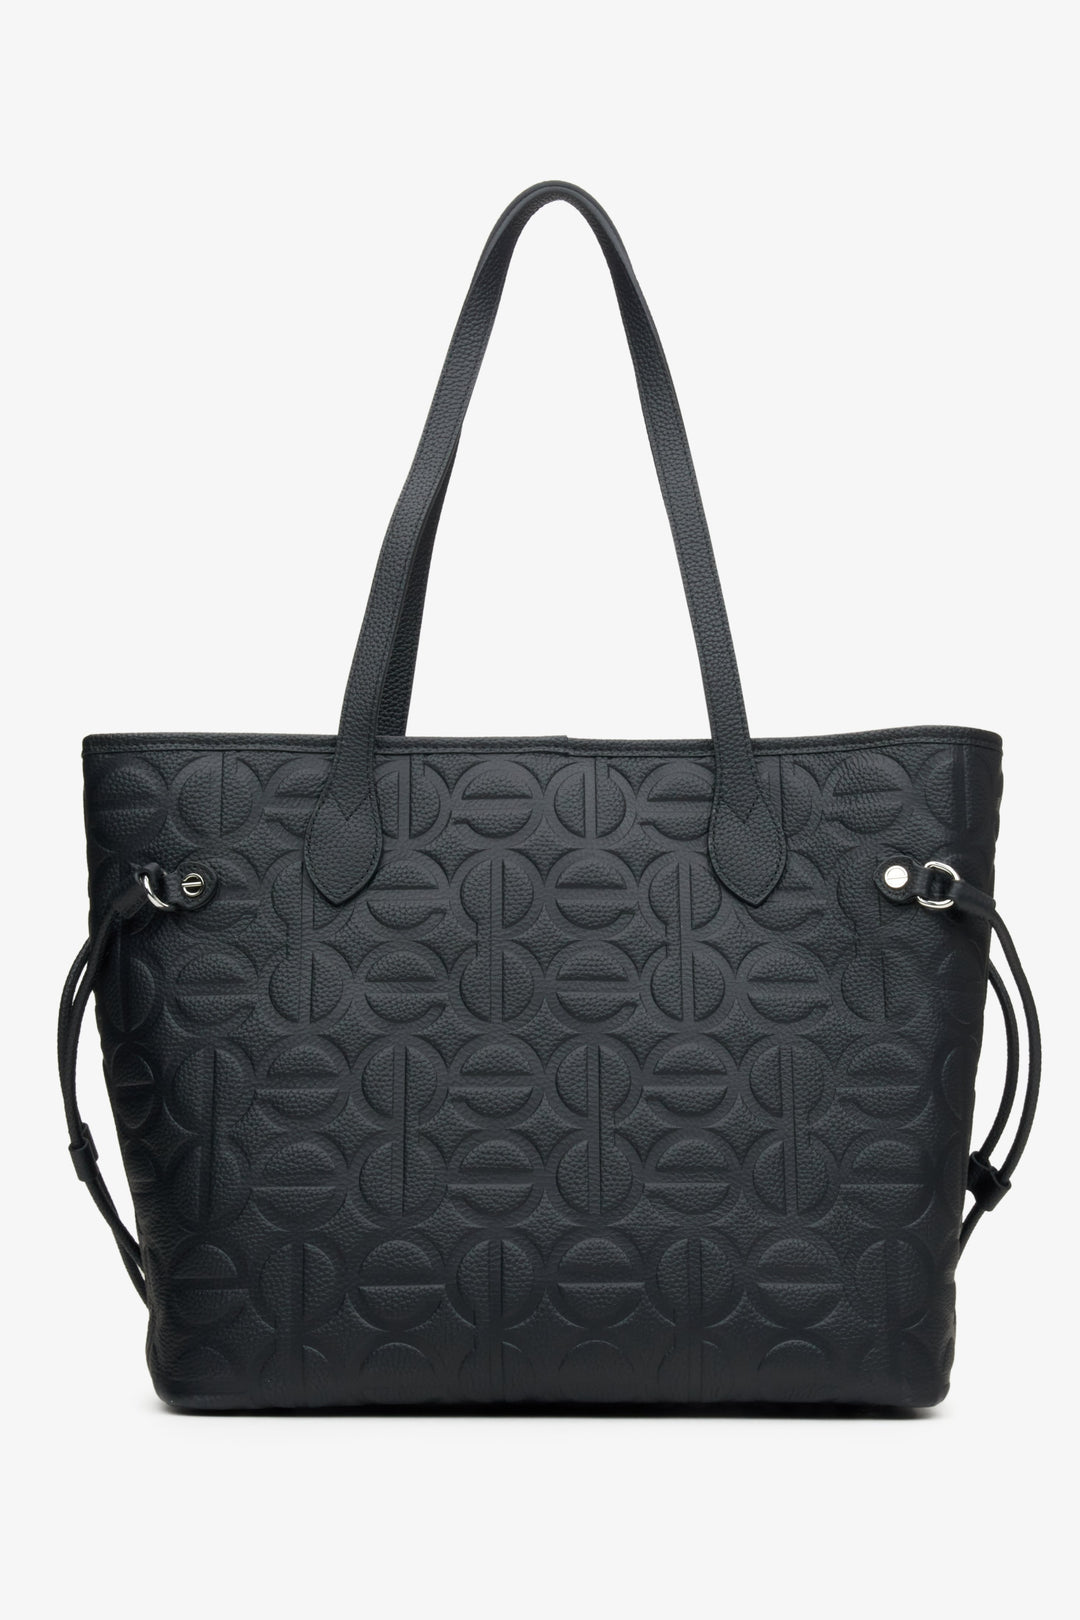 Black leather Estro shopper bag.